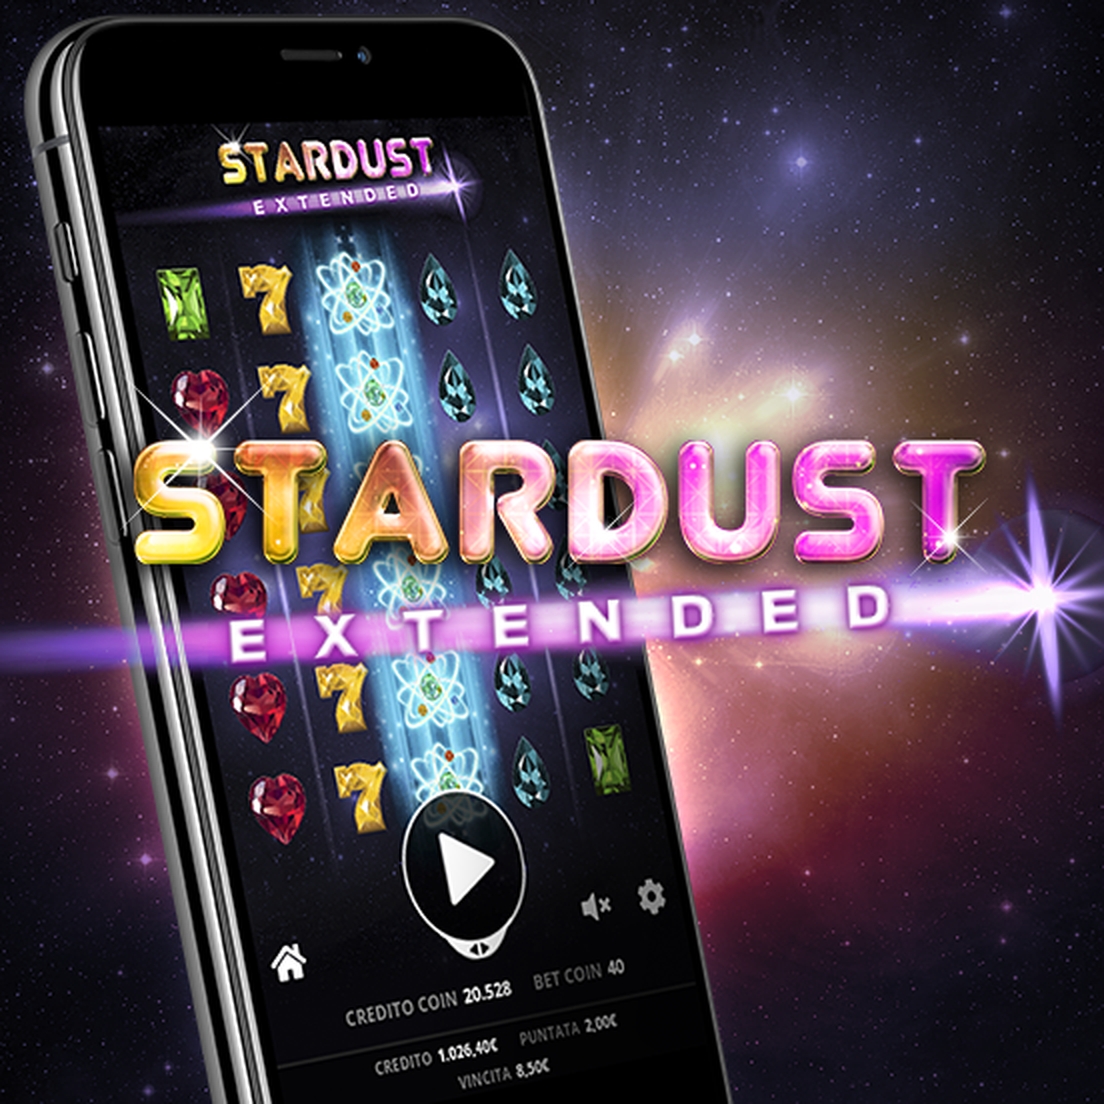 Stardust Evolution demo